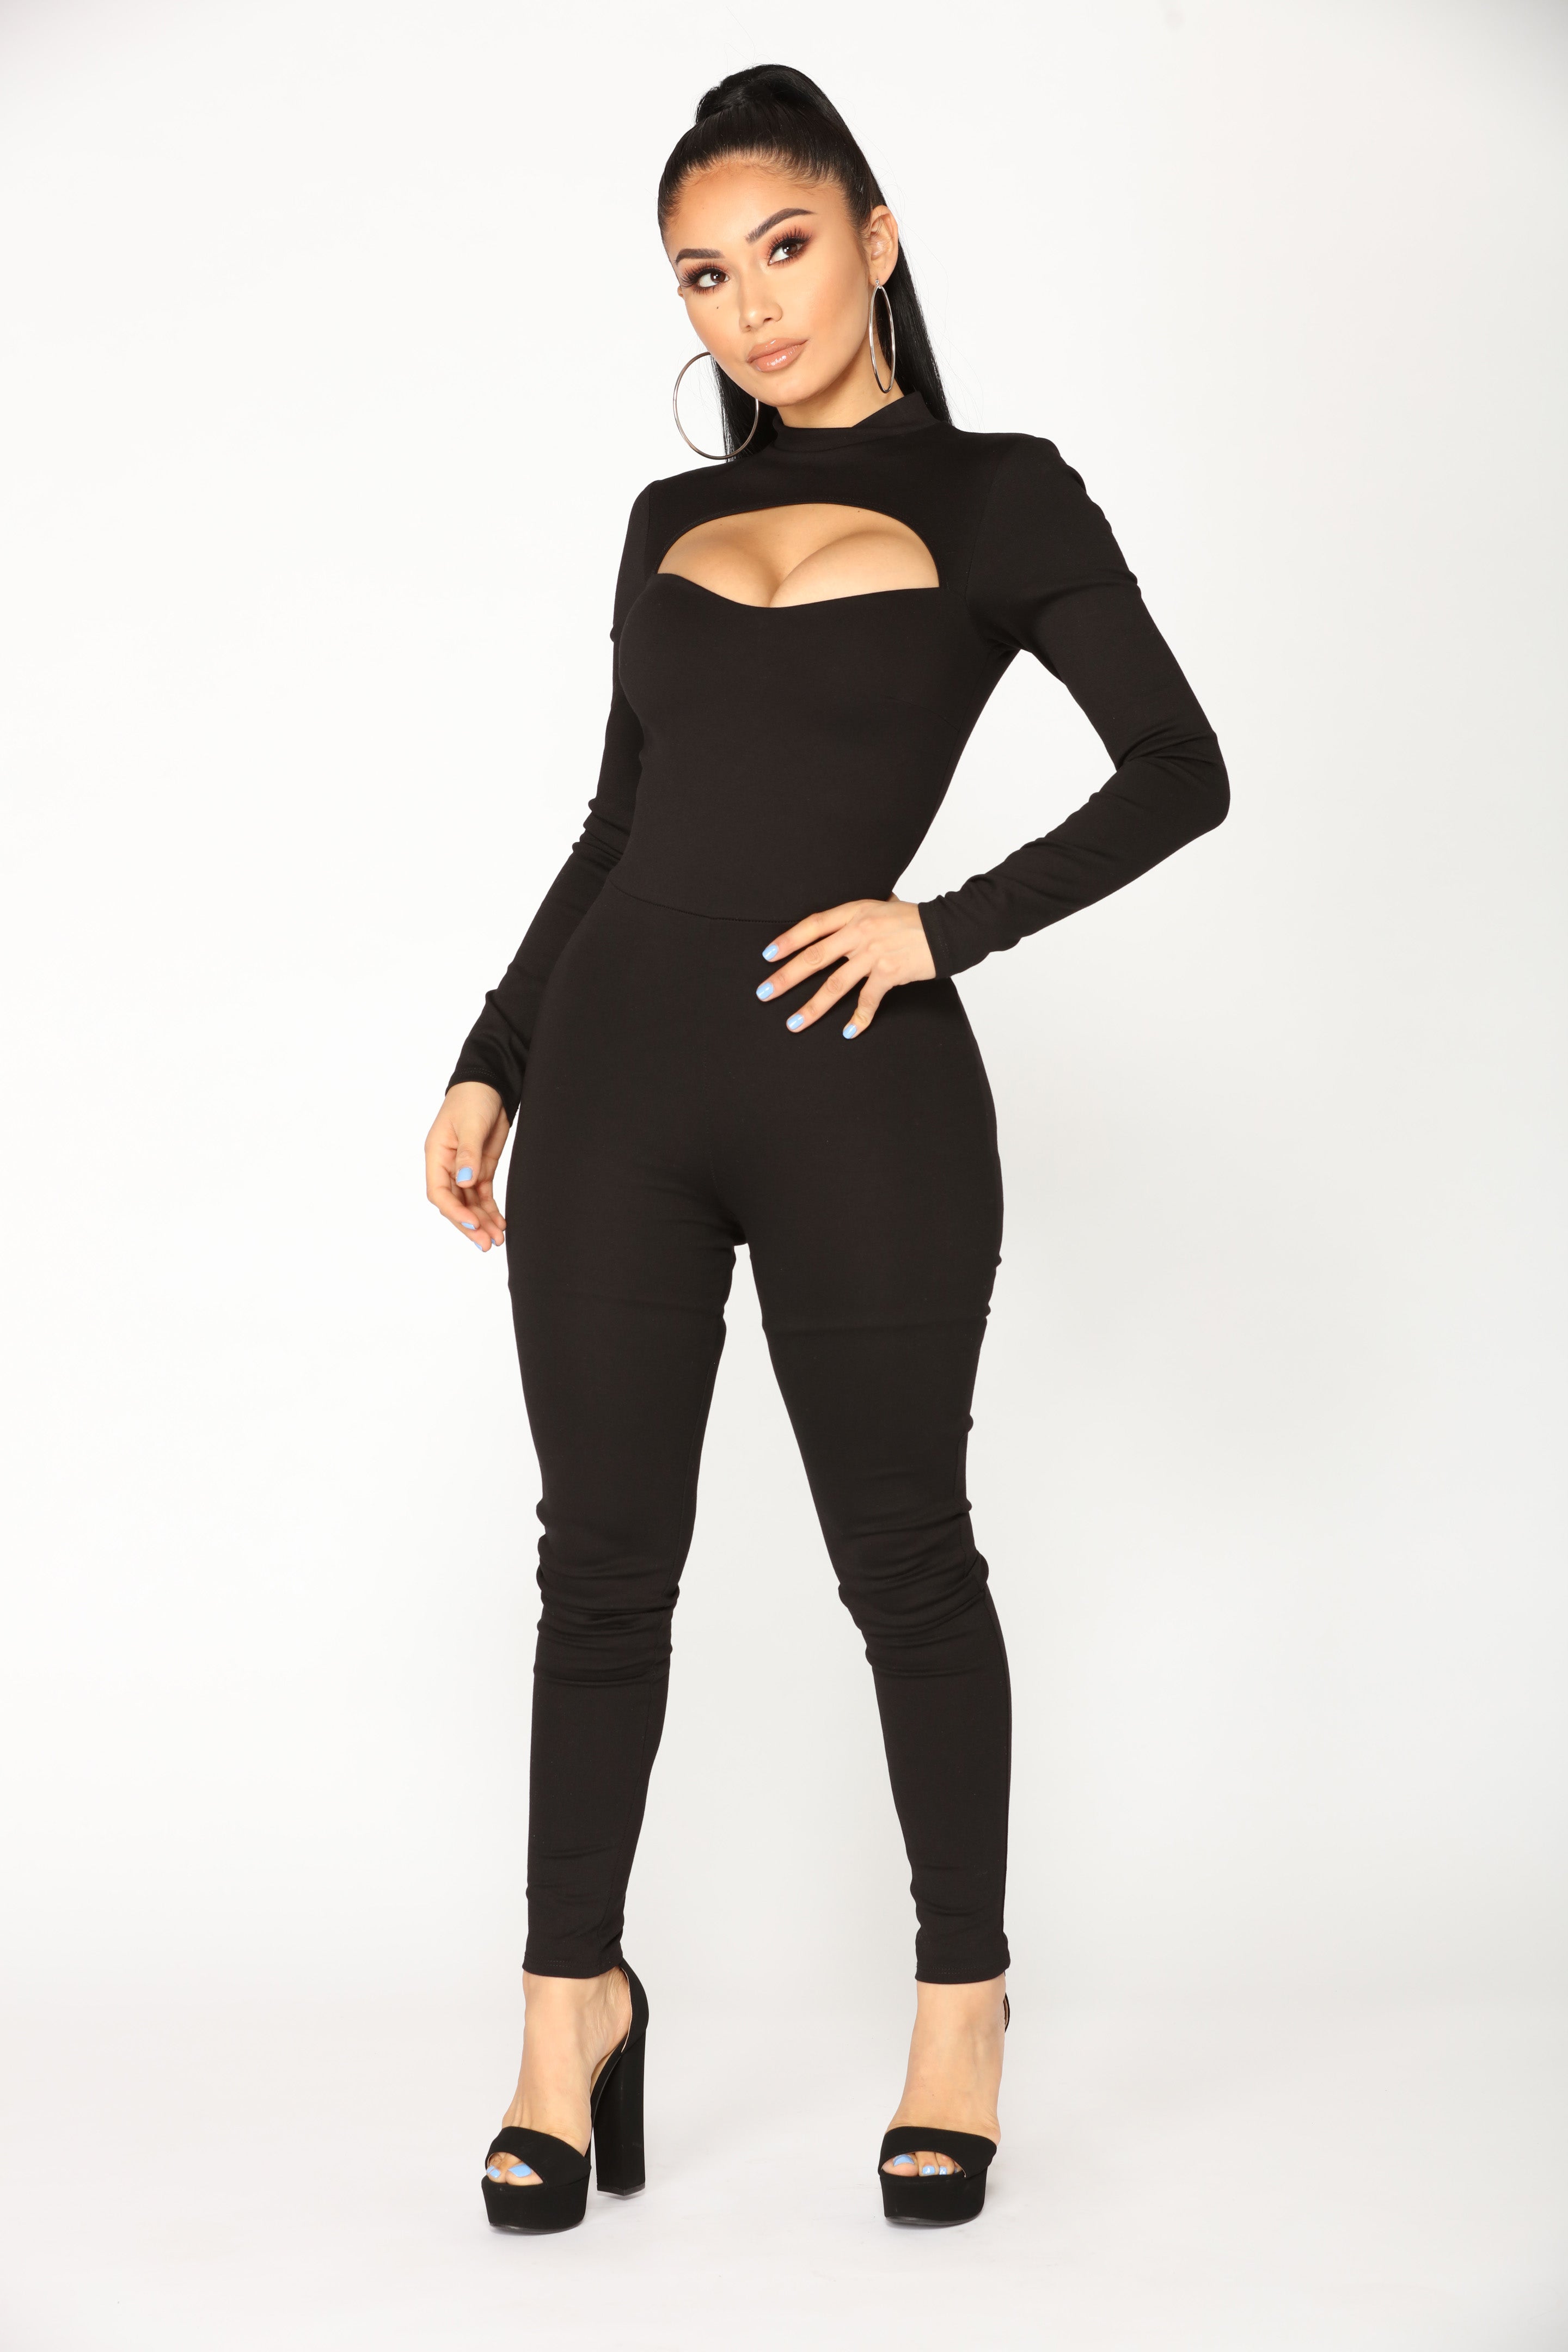 fashion nova jumpsuits black